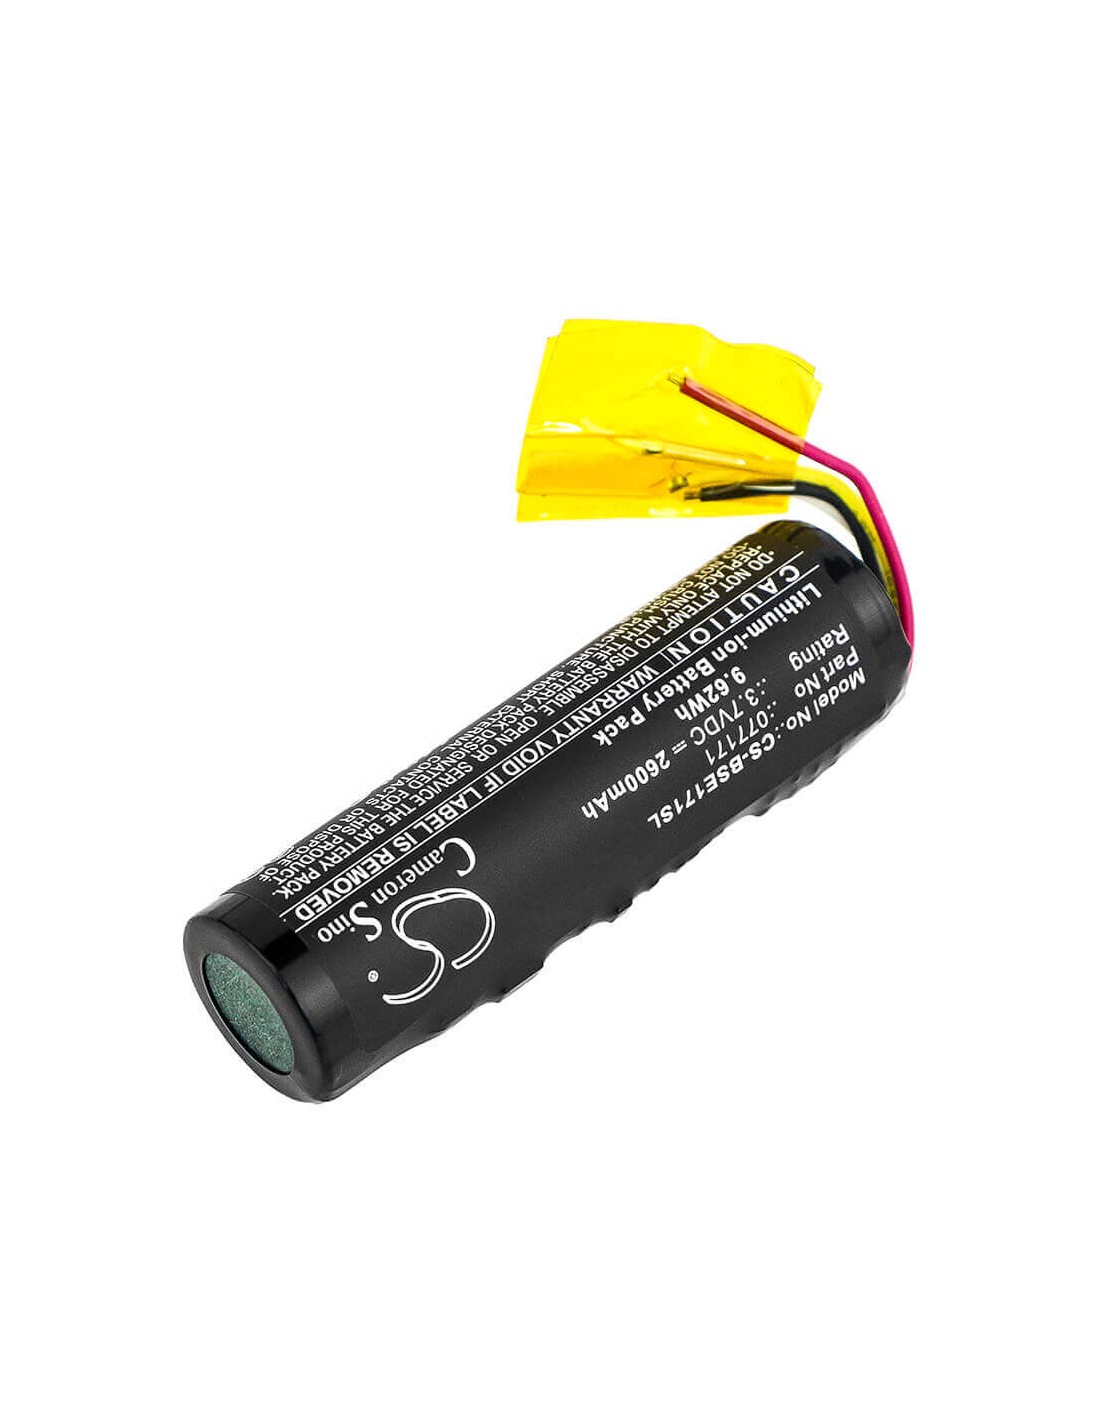 Battery for Bose, 423816, Soundlink Micro 3.7V, 2600mAh - 9.62Wh